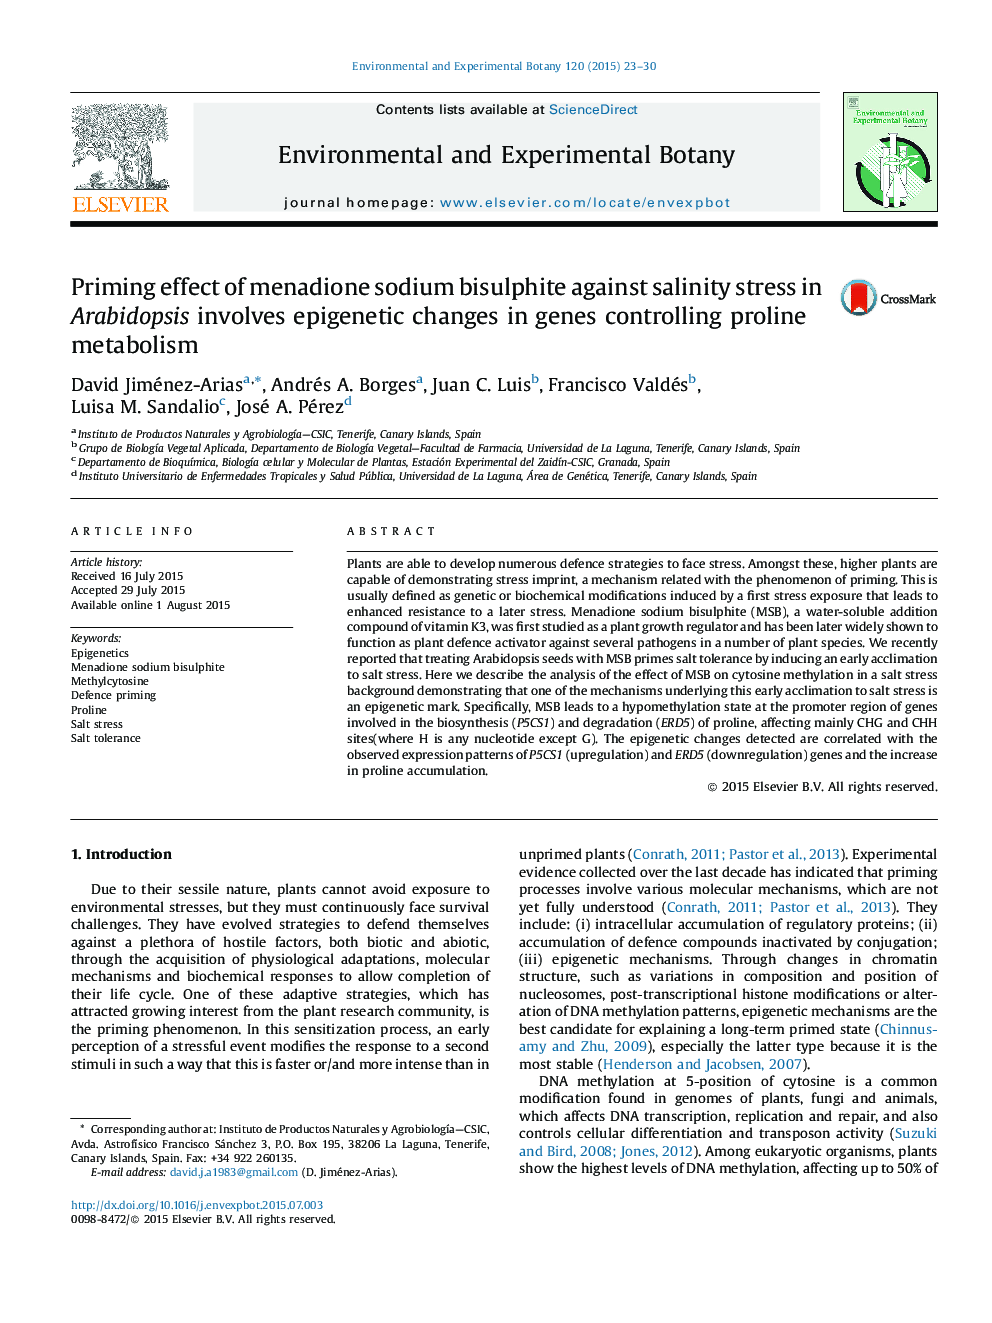 Priming effect of menadione sodium bisulphite against salinity stress in Arabidopsis involves epigenetic changes in genes controlling proline metabolism